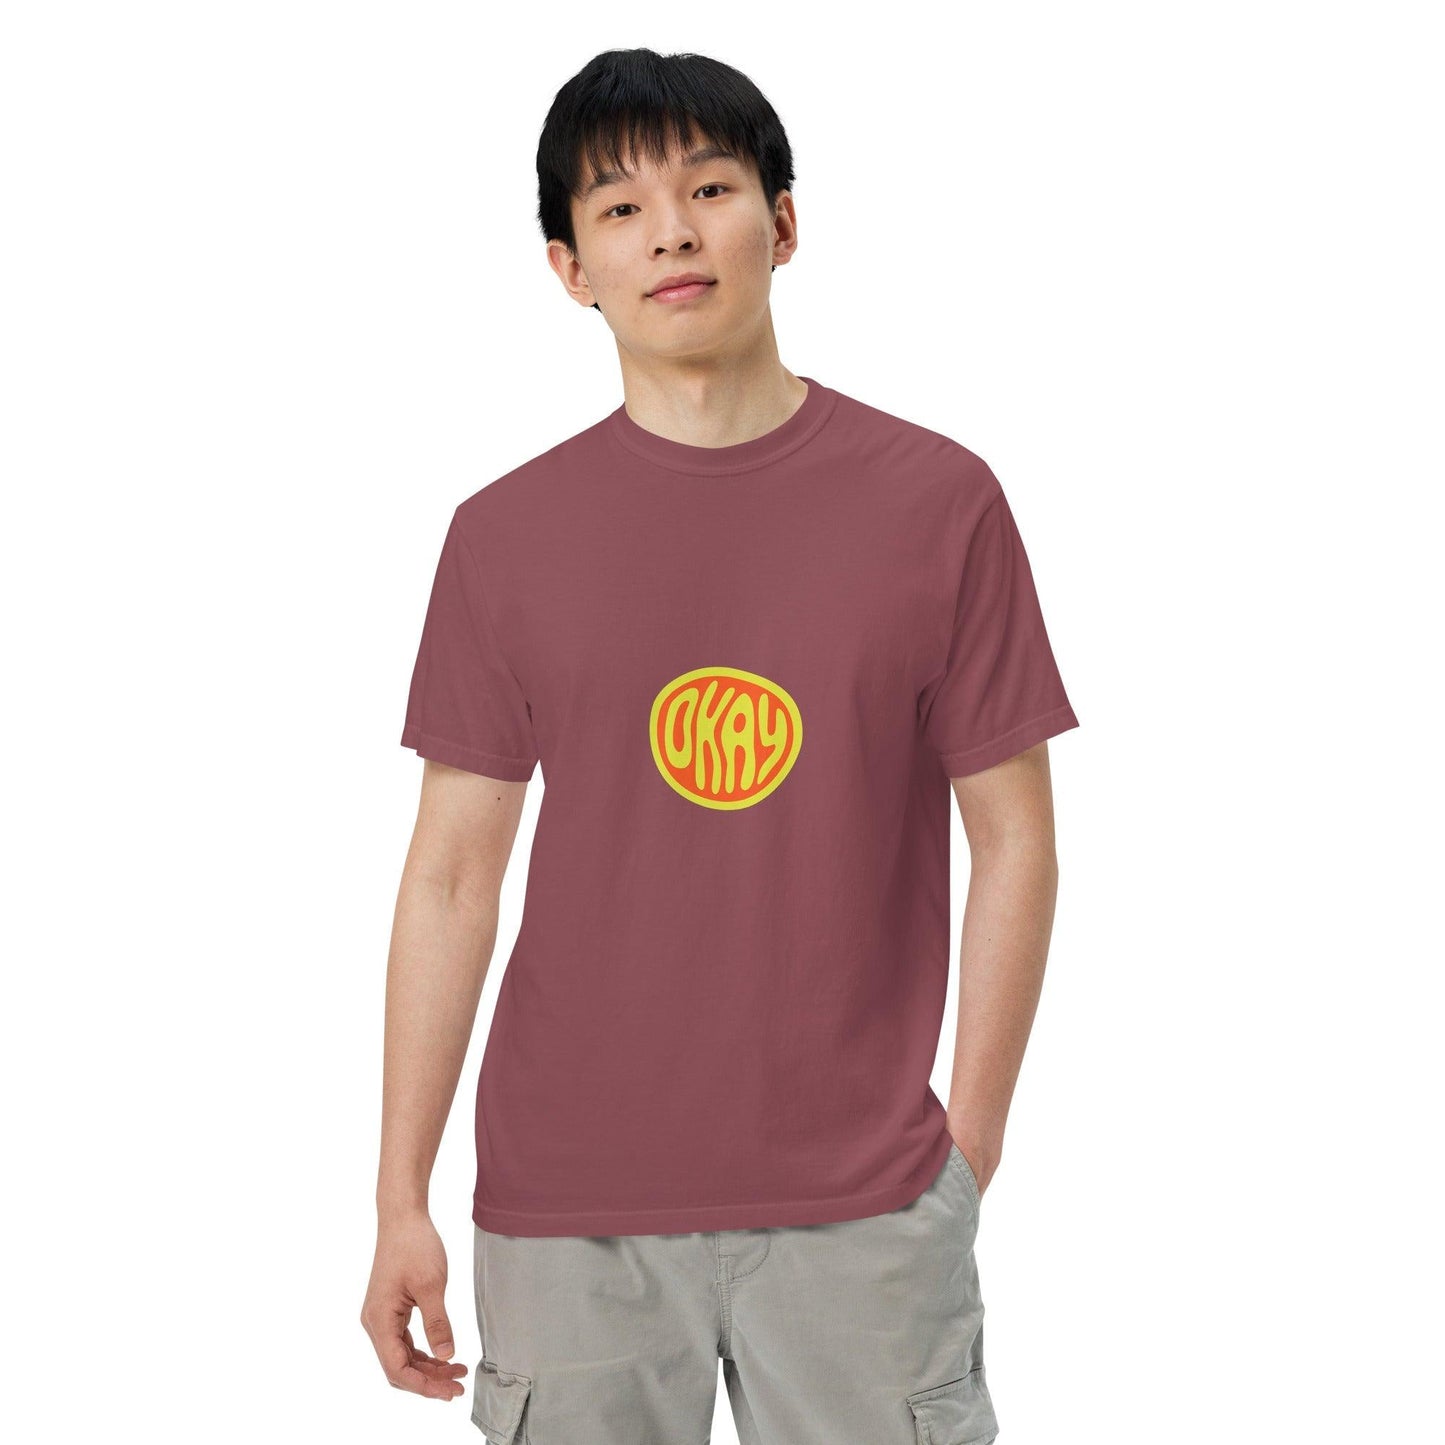 Camiseta gruesa "Okay" - TopShopperSpot